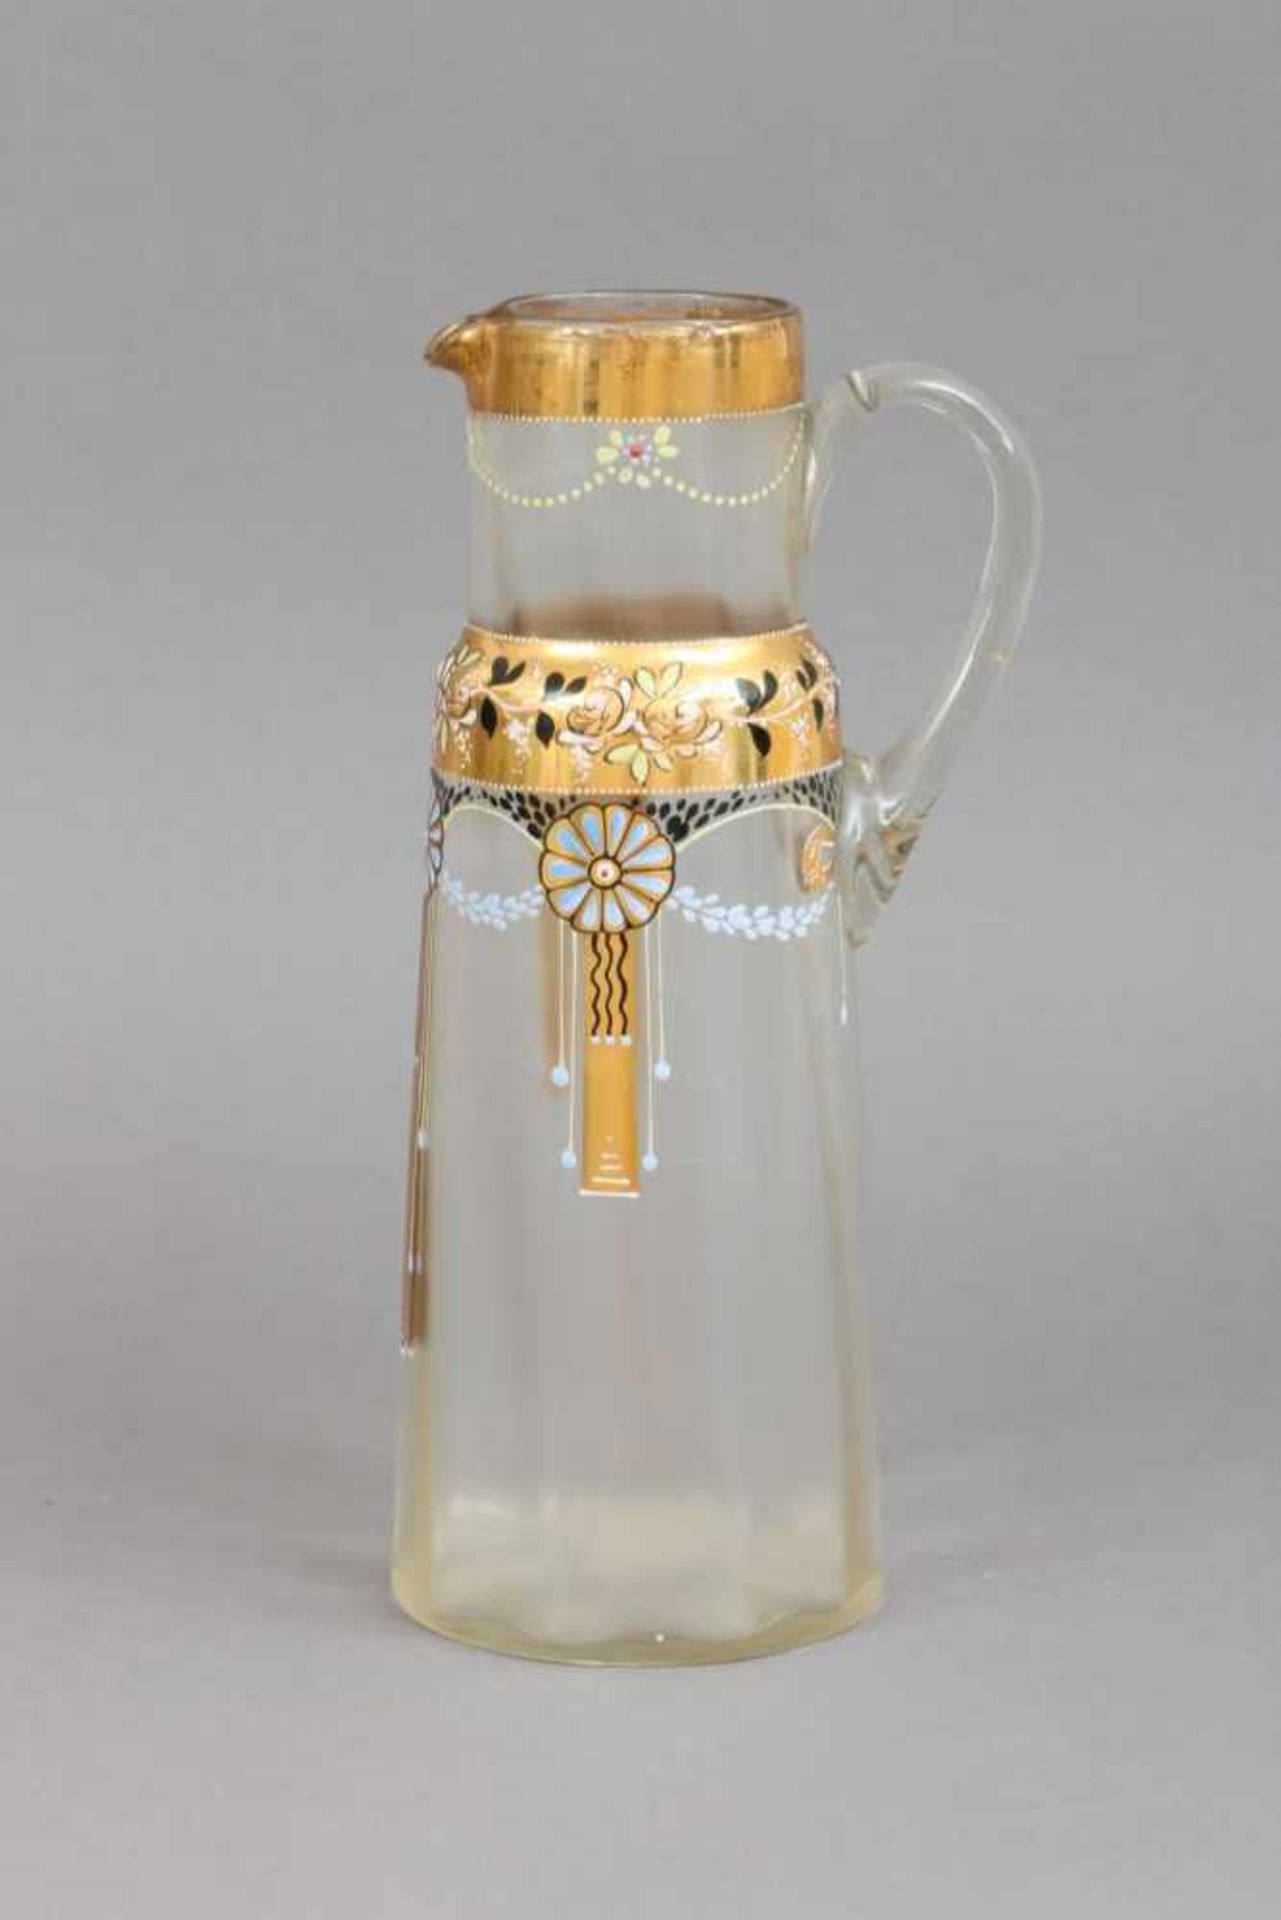 Glaskrug der Jahrhundertwendekegelförmiger, konischer Korpus mit Ohrengriff, farbloses Glas,